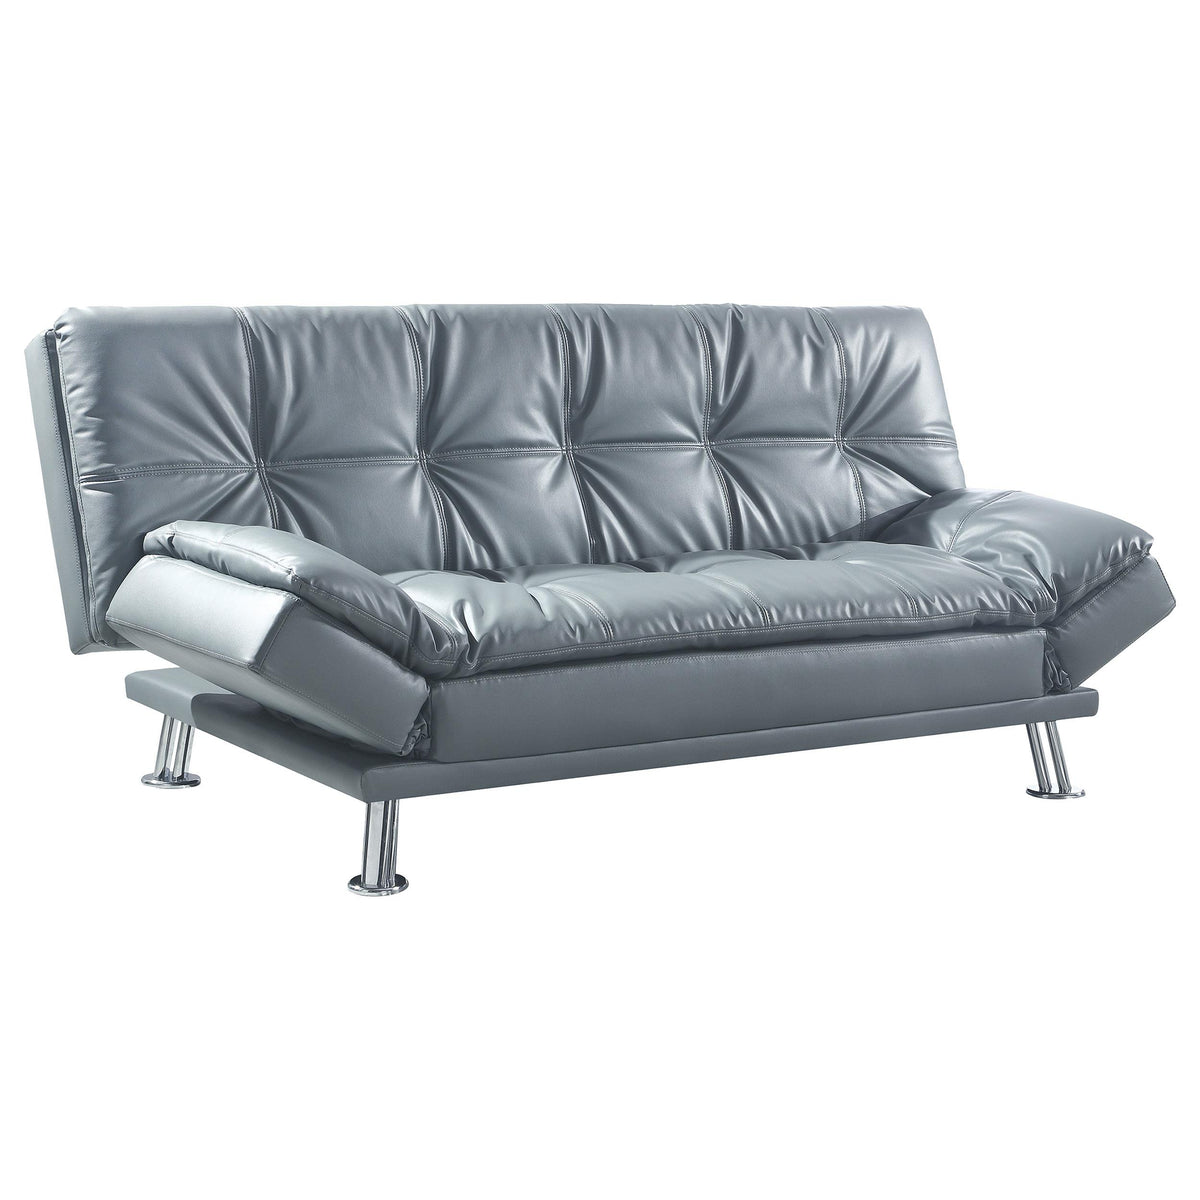 Dilleston Tufted Back Upholstered Sofa Bed Grey Dilleston Tufted Back Upholstered Sofa Bed Grey Half Price Furniture